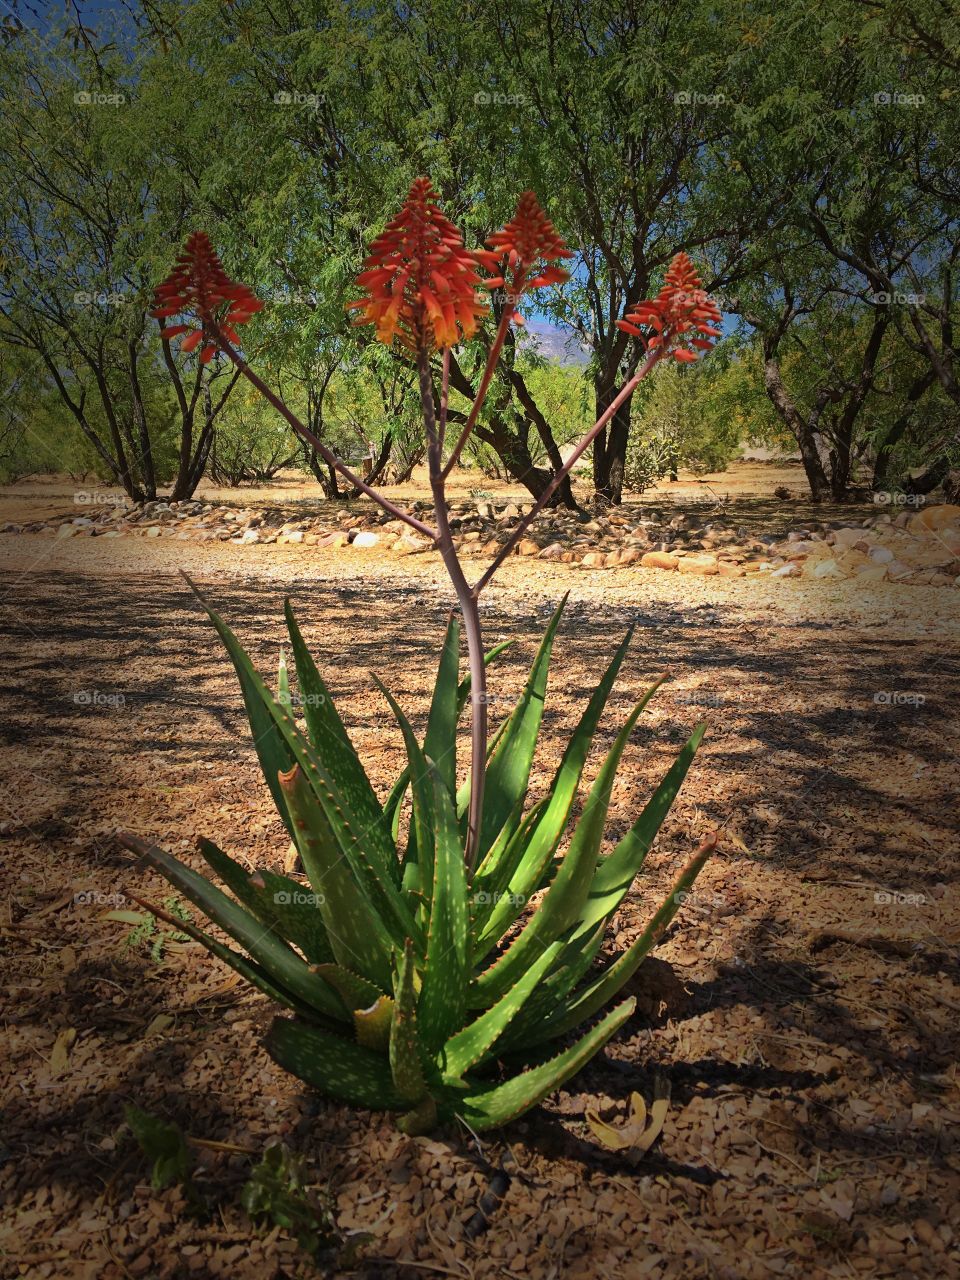 Aloe bloom in southern Arizona 